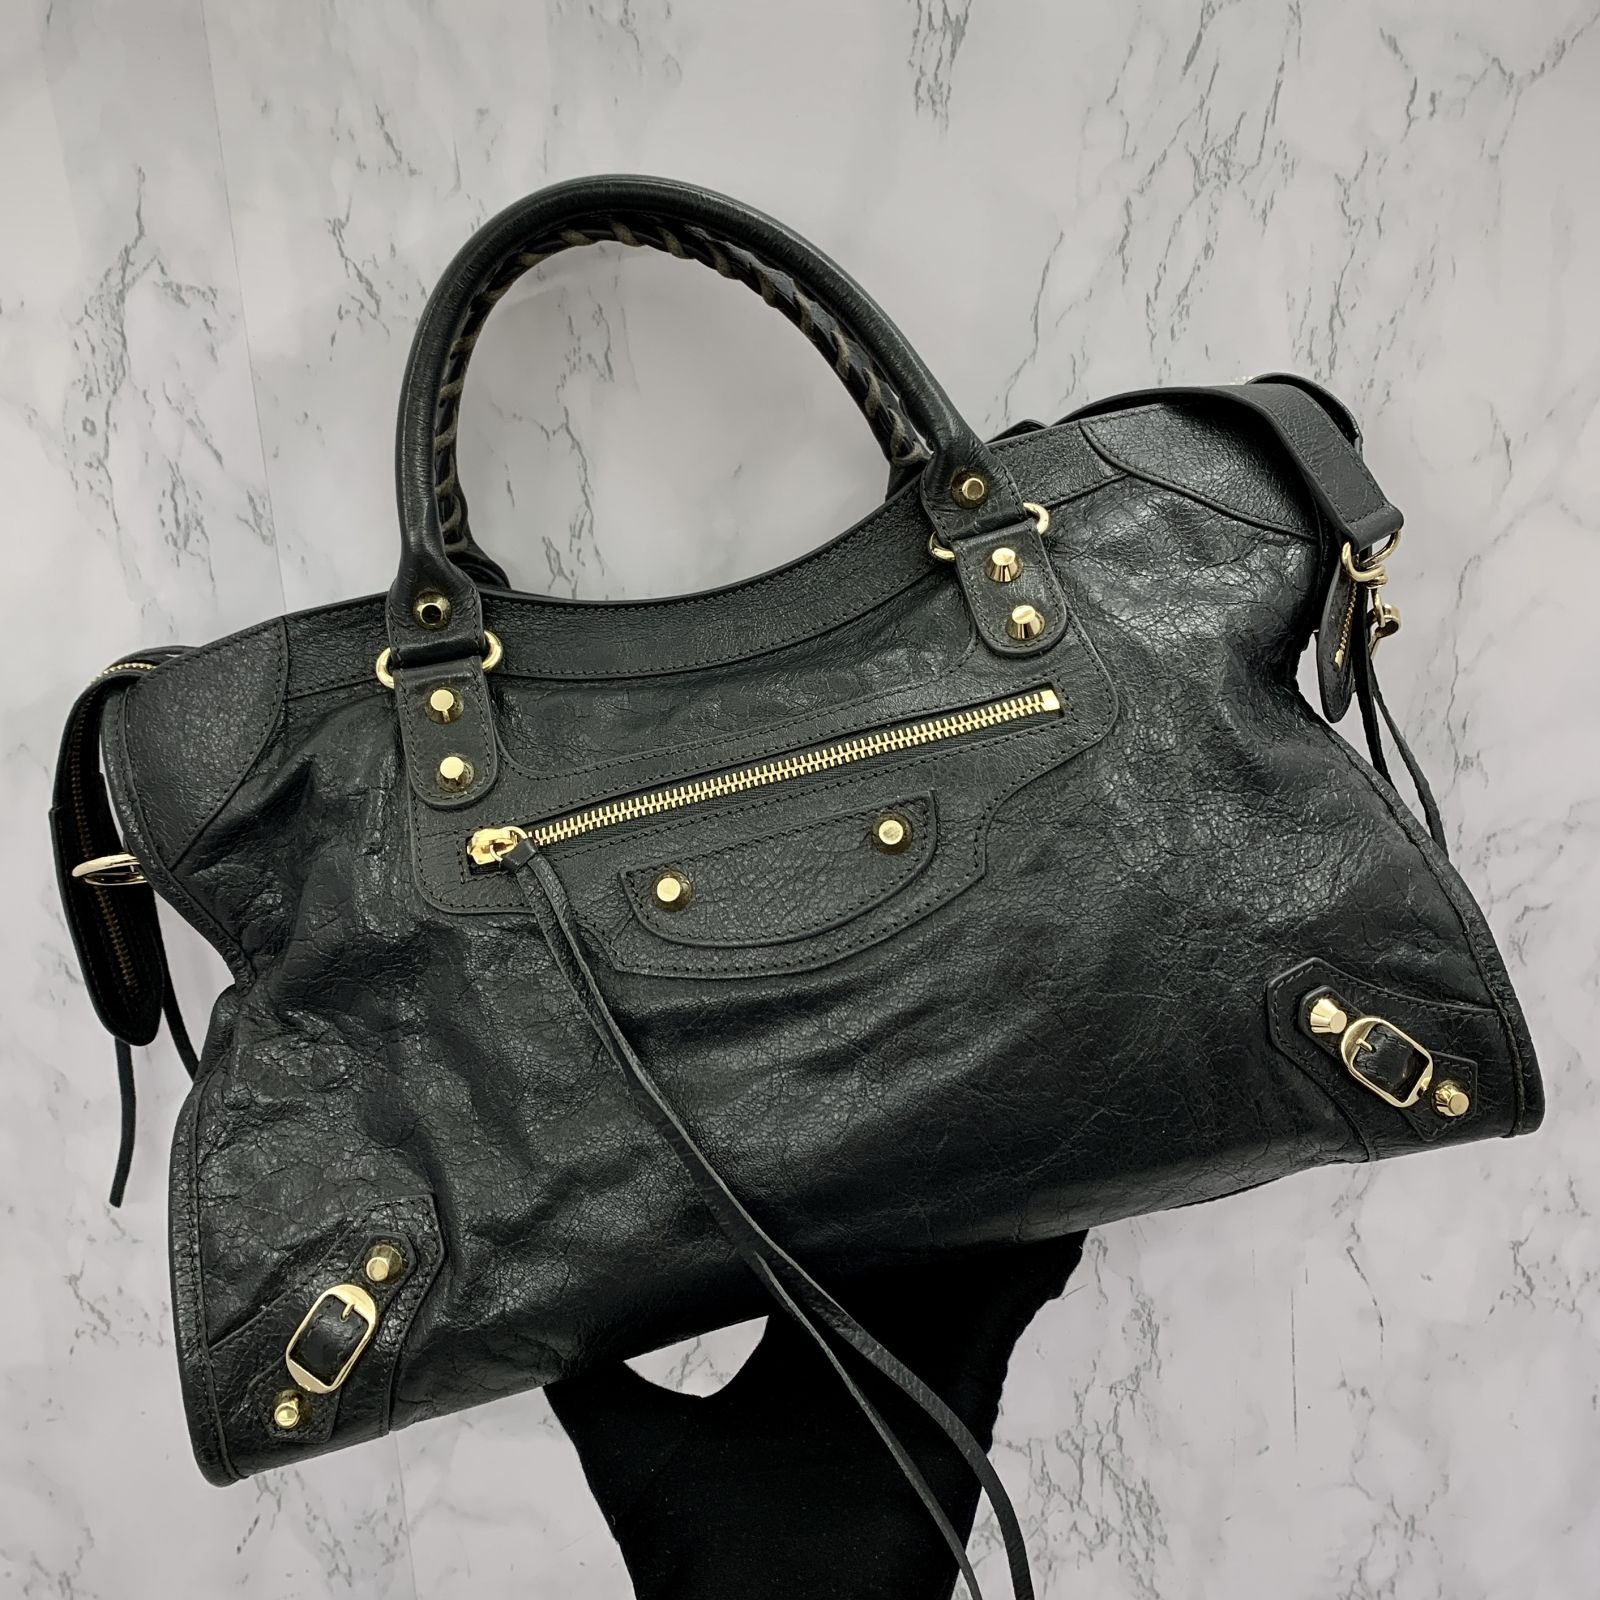 Balenciaga 2way Leather Handbag Shoulder Bag 115748 467891 Womens